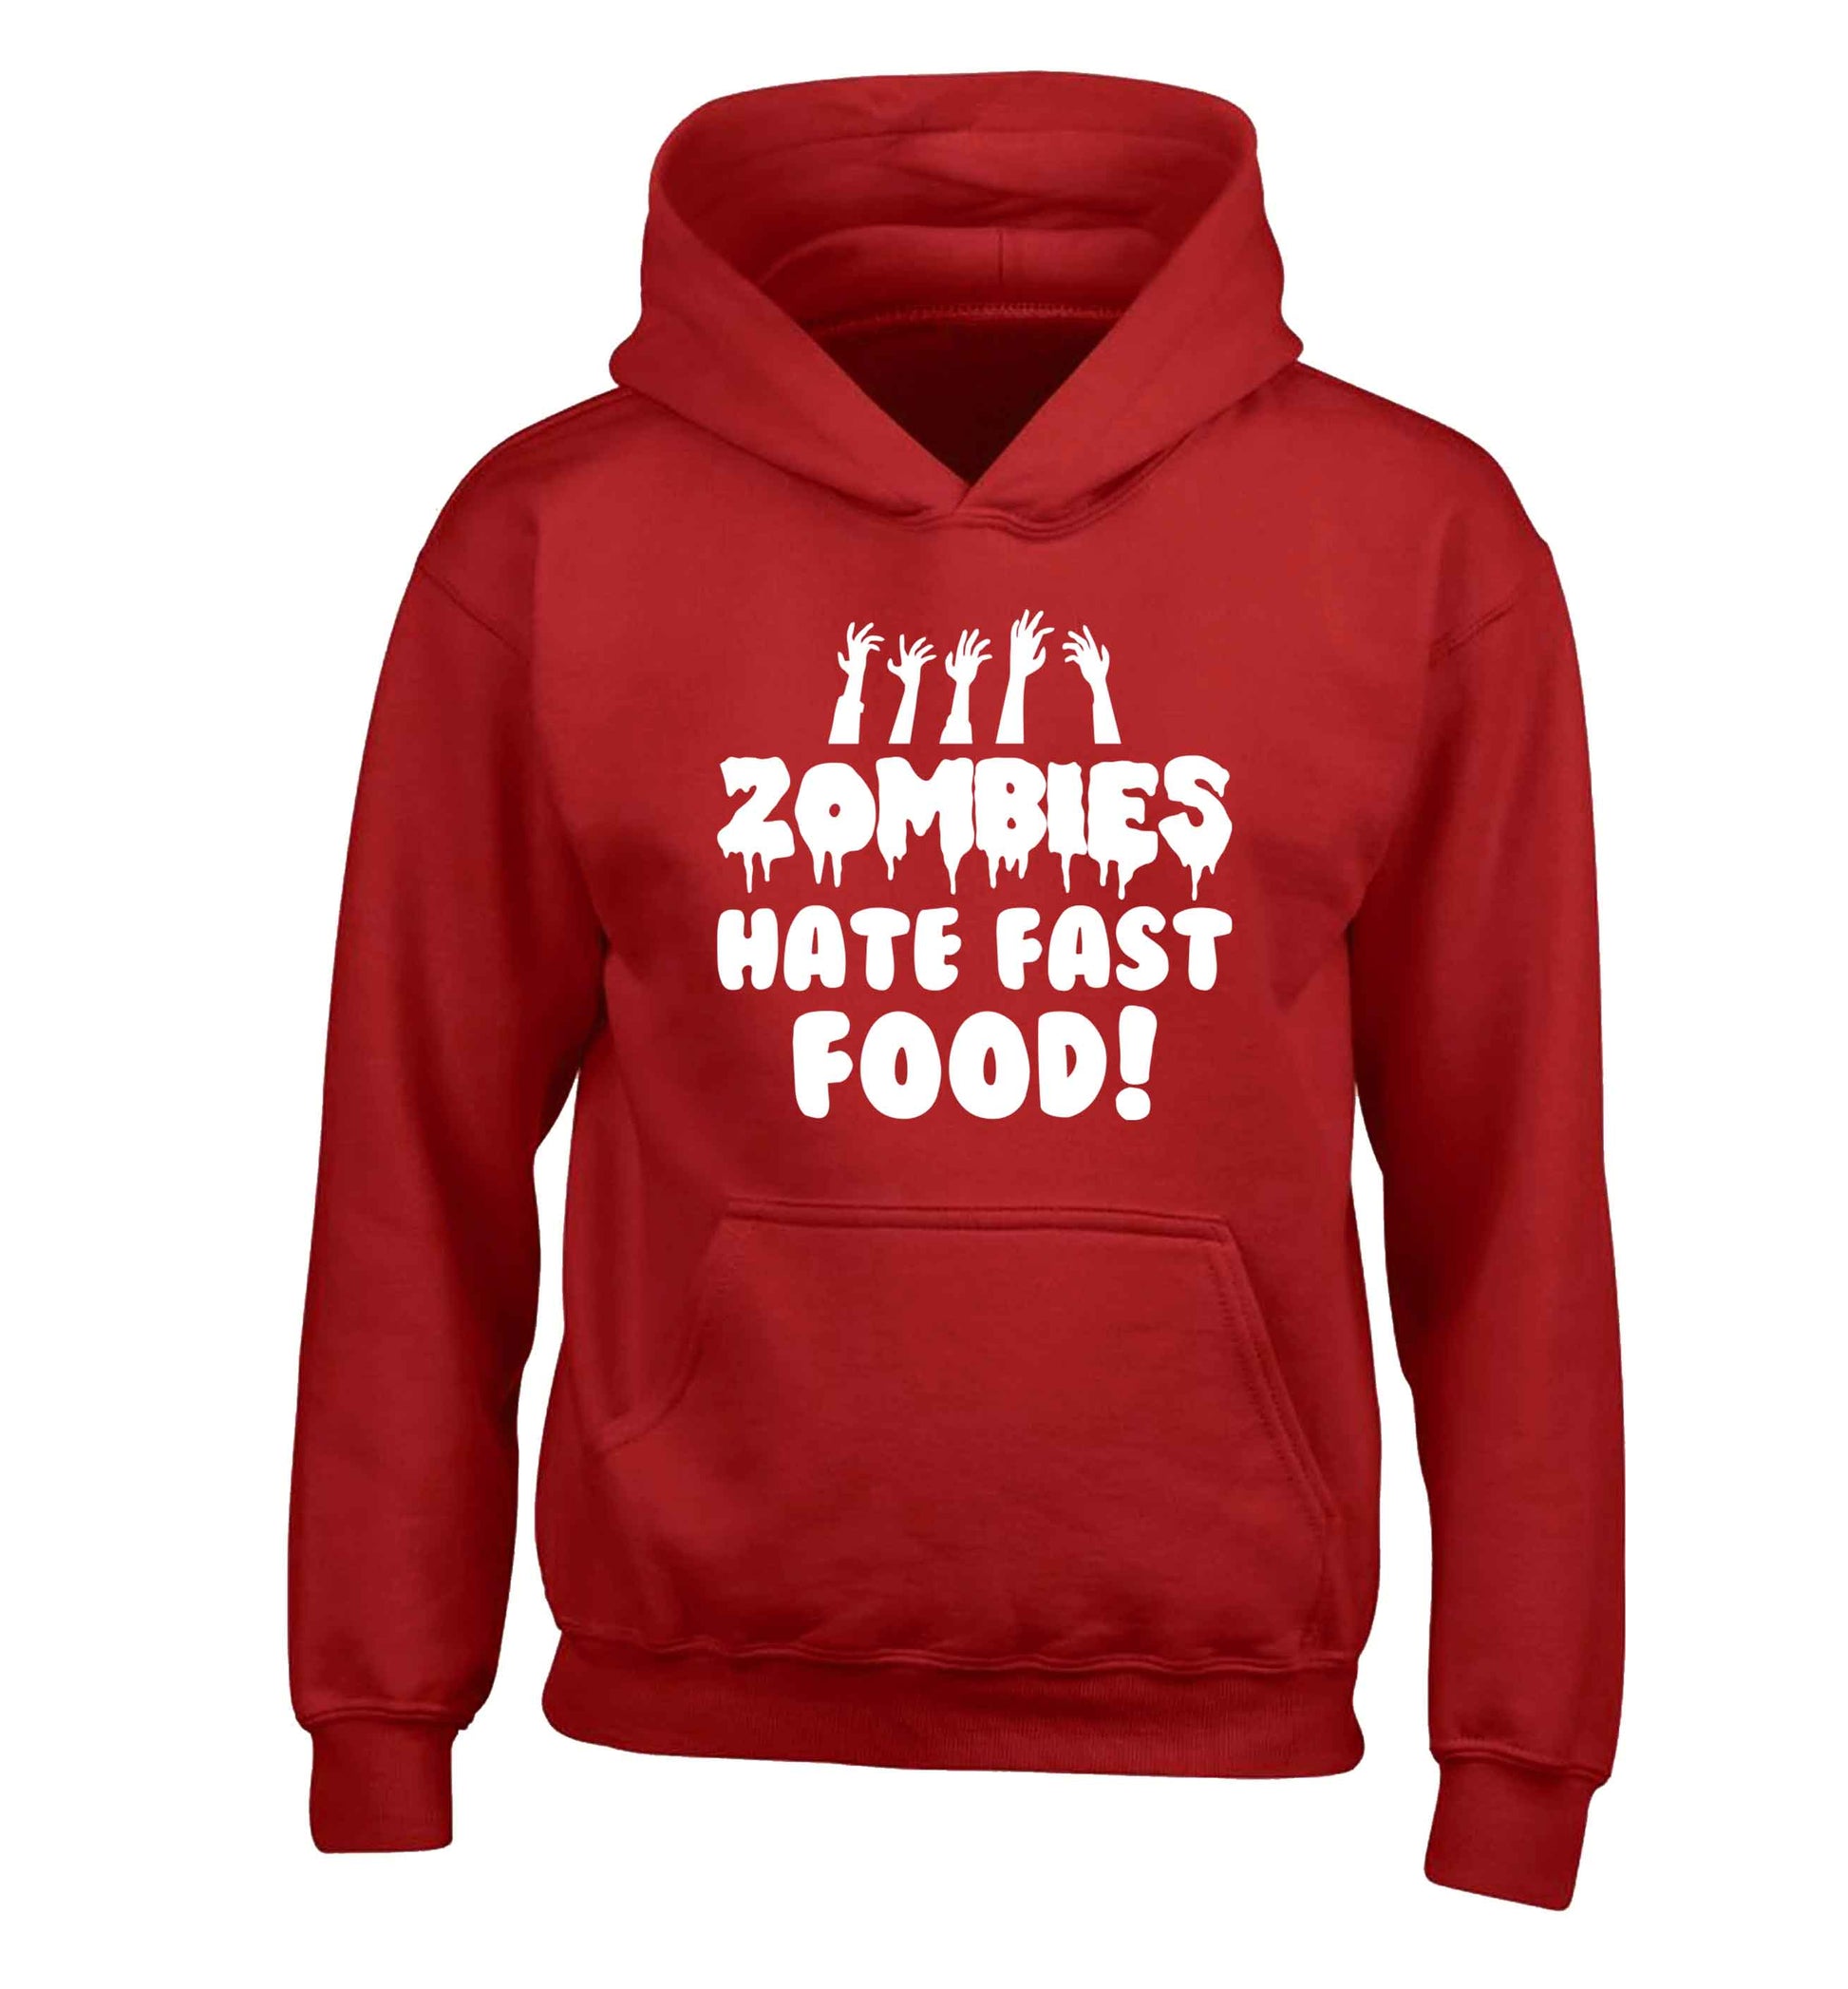 Zombies hate fast food children's red hoodie 12-13 Years